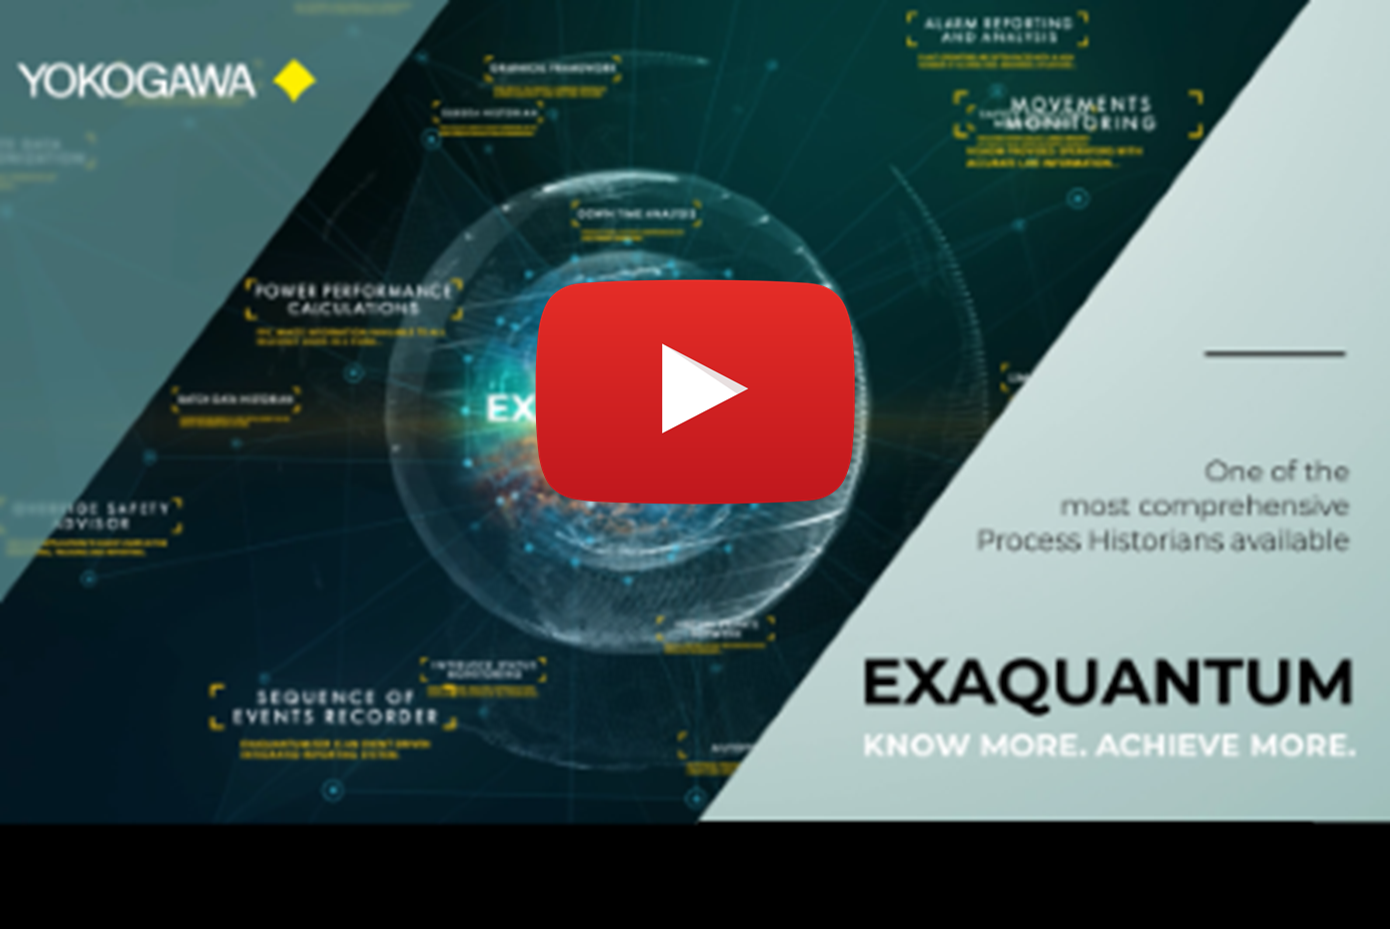 Exaquantum Overview Video